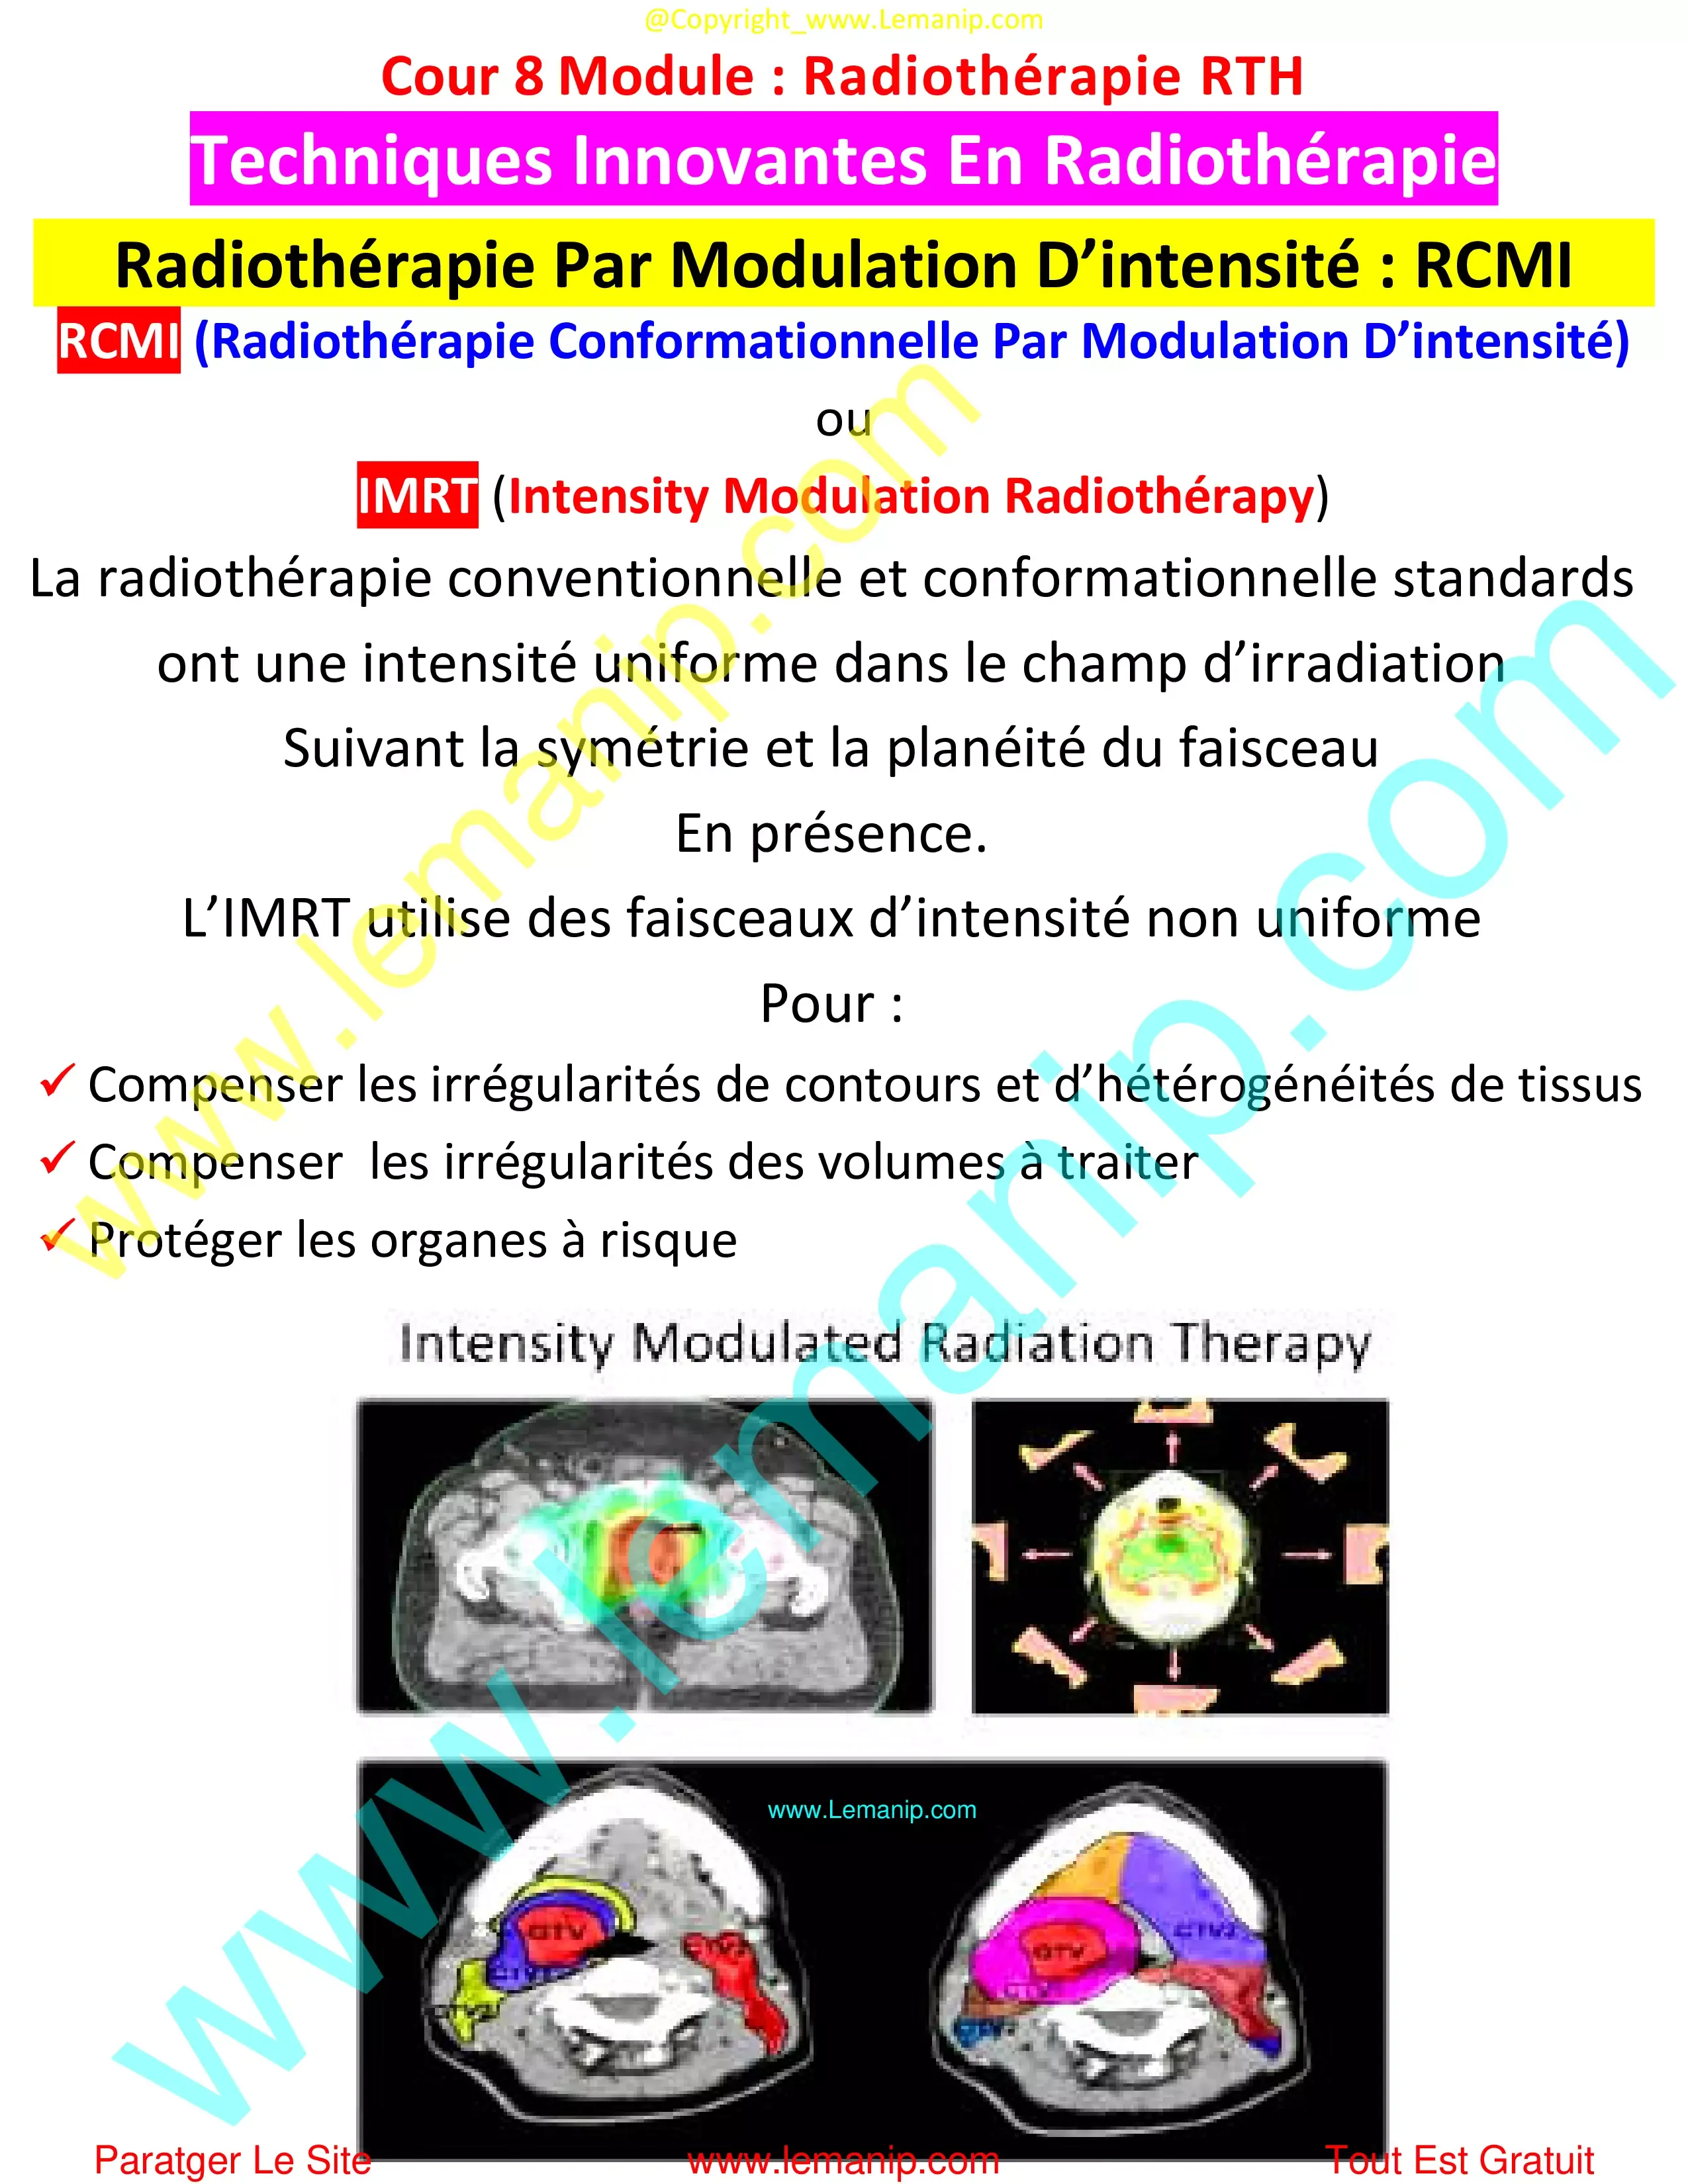 Radiothérapie Par Modulation D’intensité : RCMI